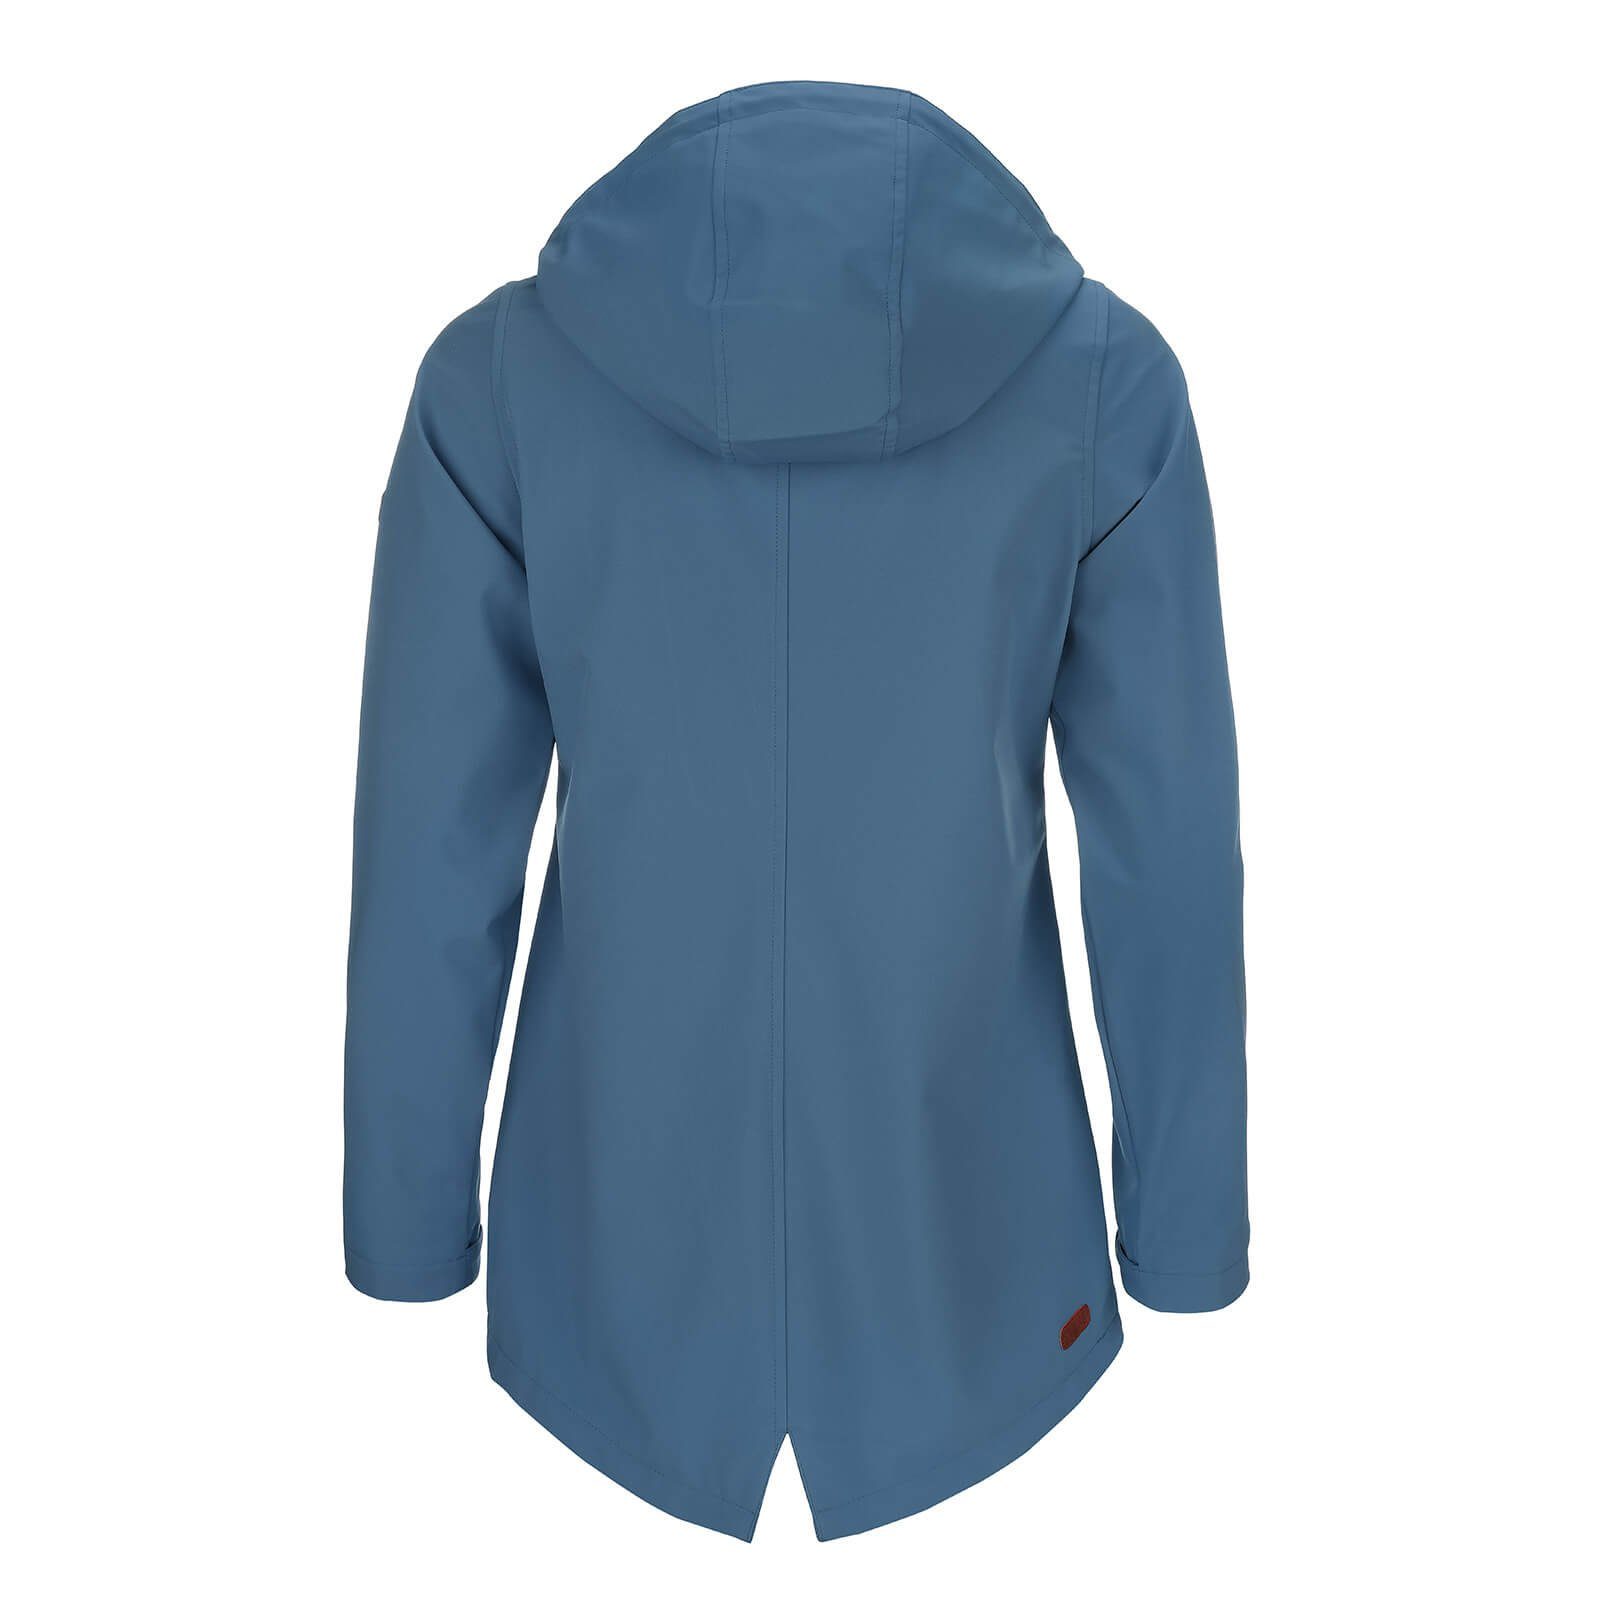 modAS Softshelljacke Damen Softshell-Mantel Jacke Kapuze - Regenjacke Unifarben rauchblau Outdoor mit